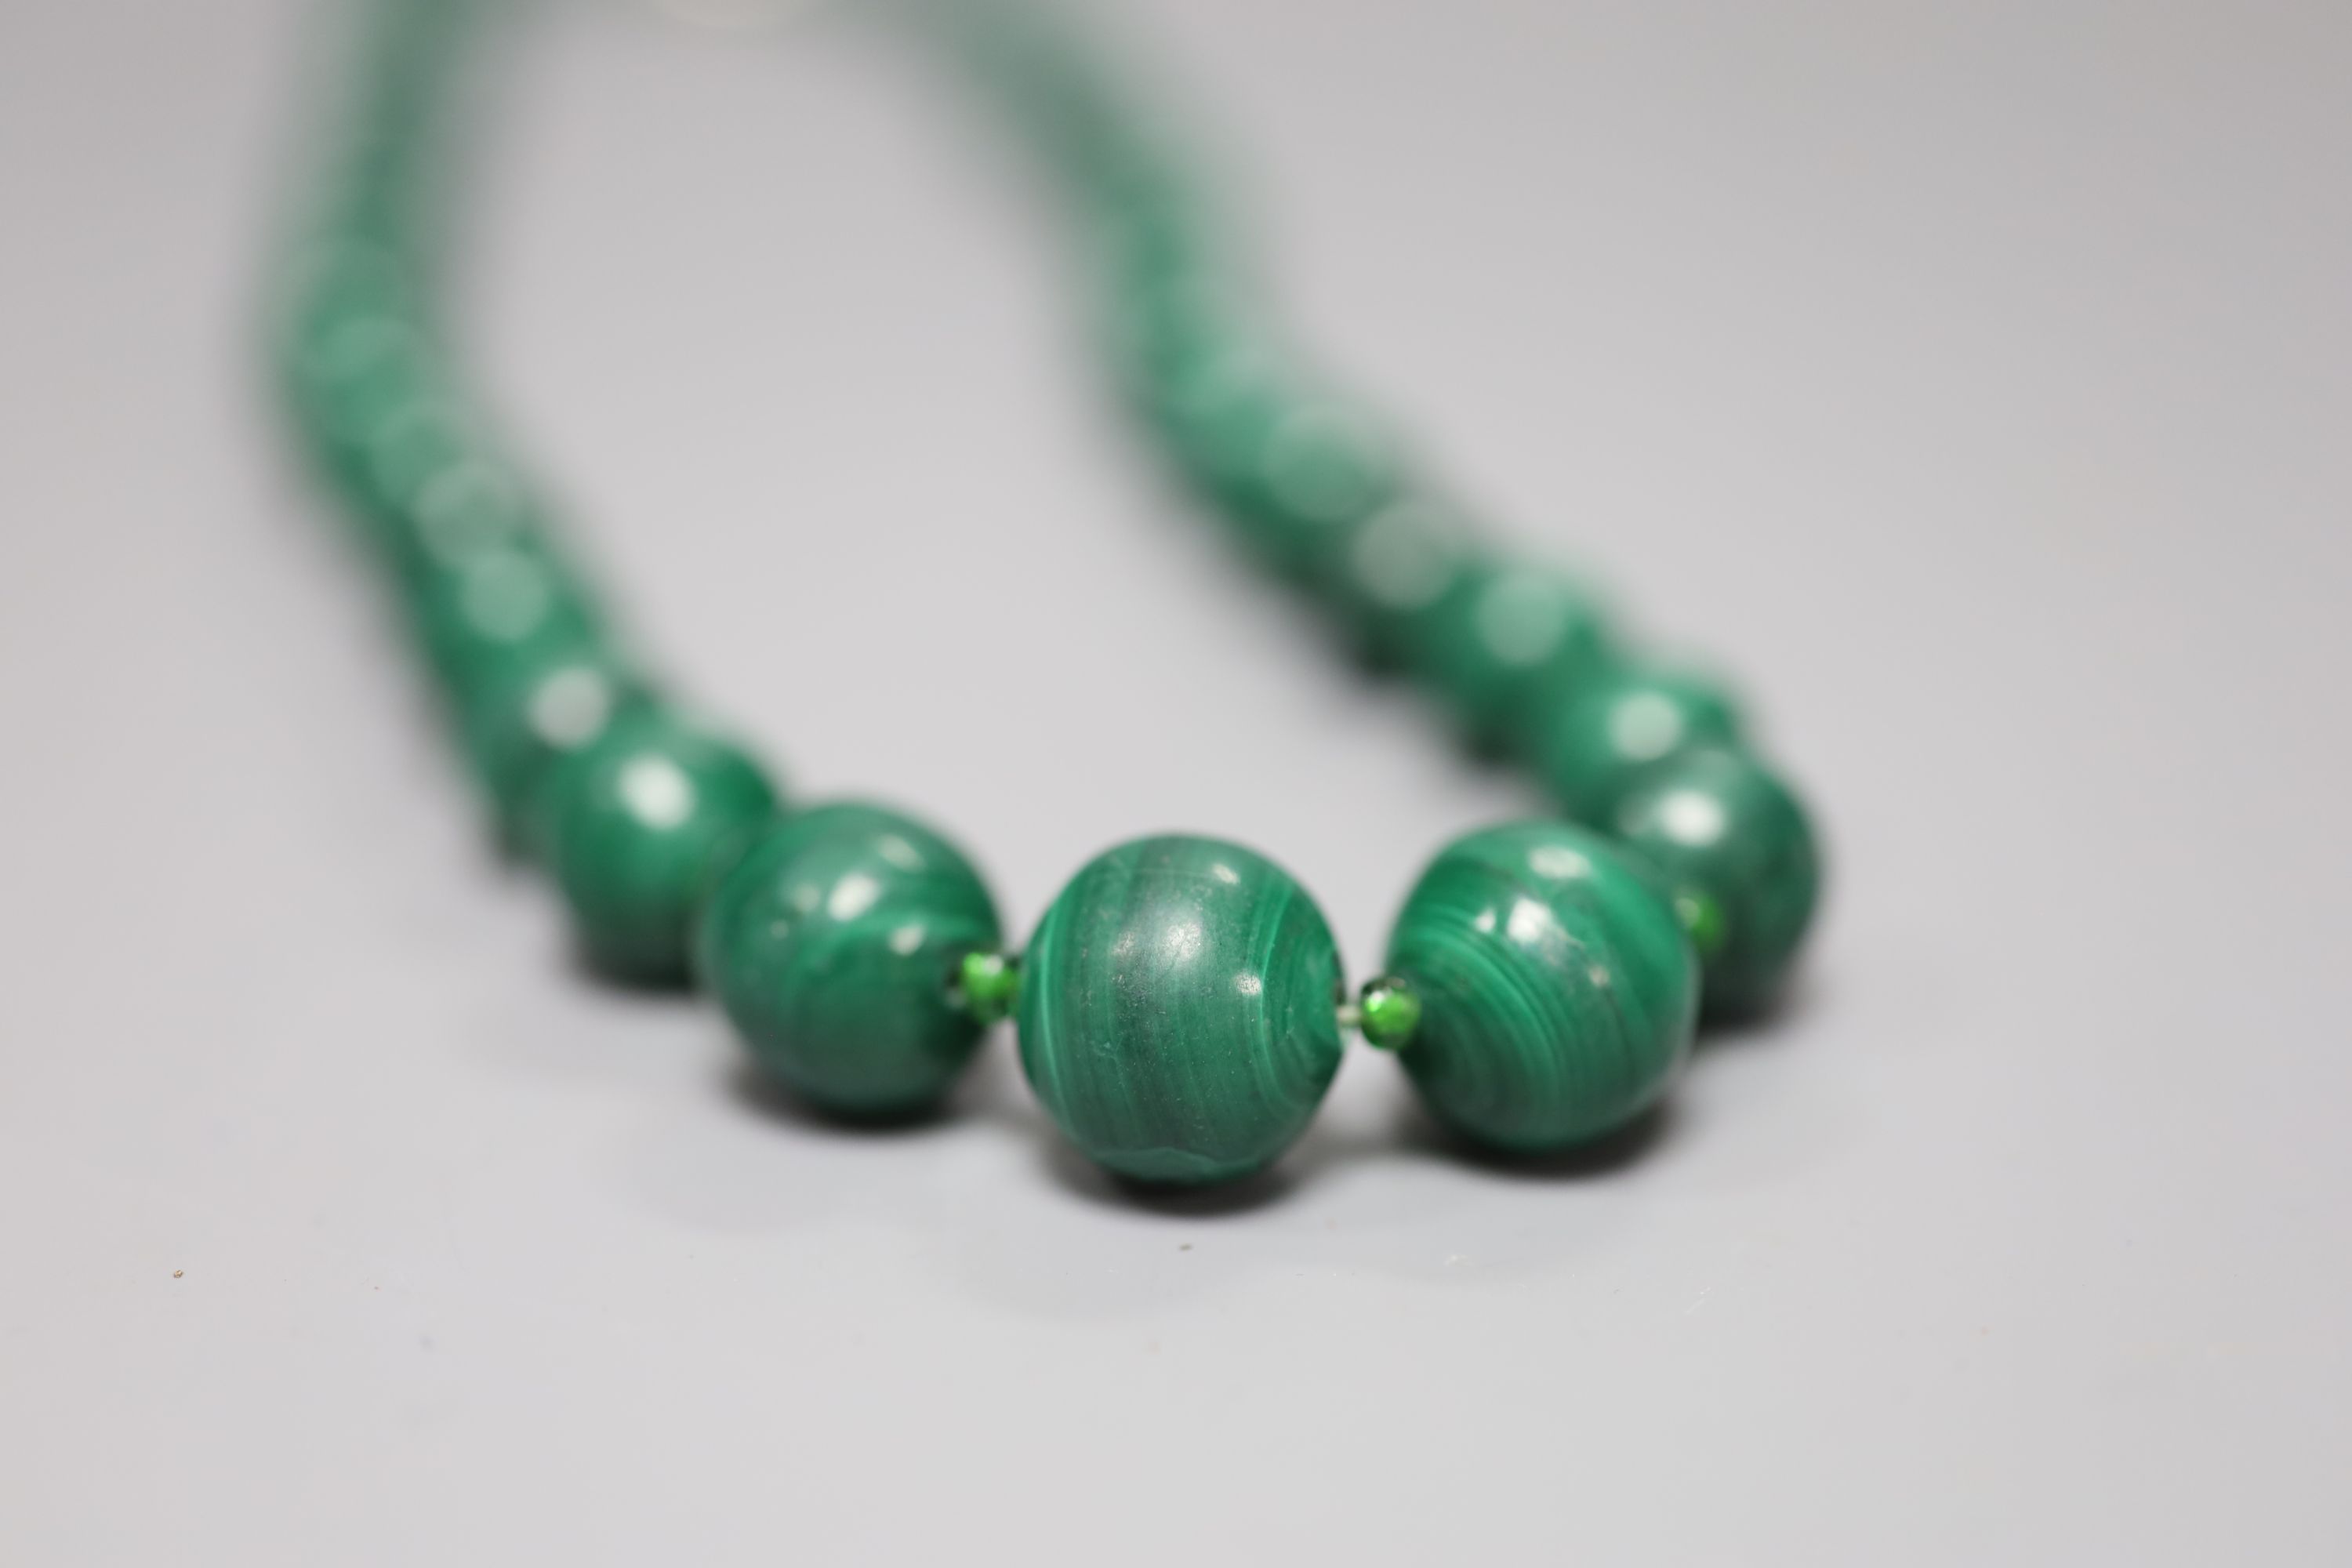 A single strand graduated malachite bead necklace, 50cm.